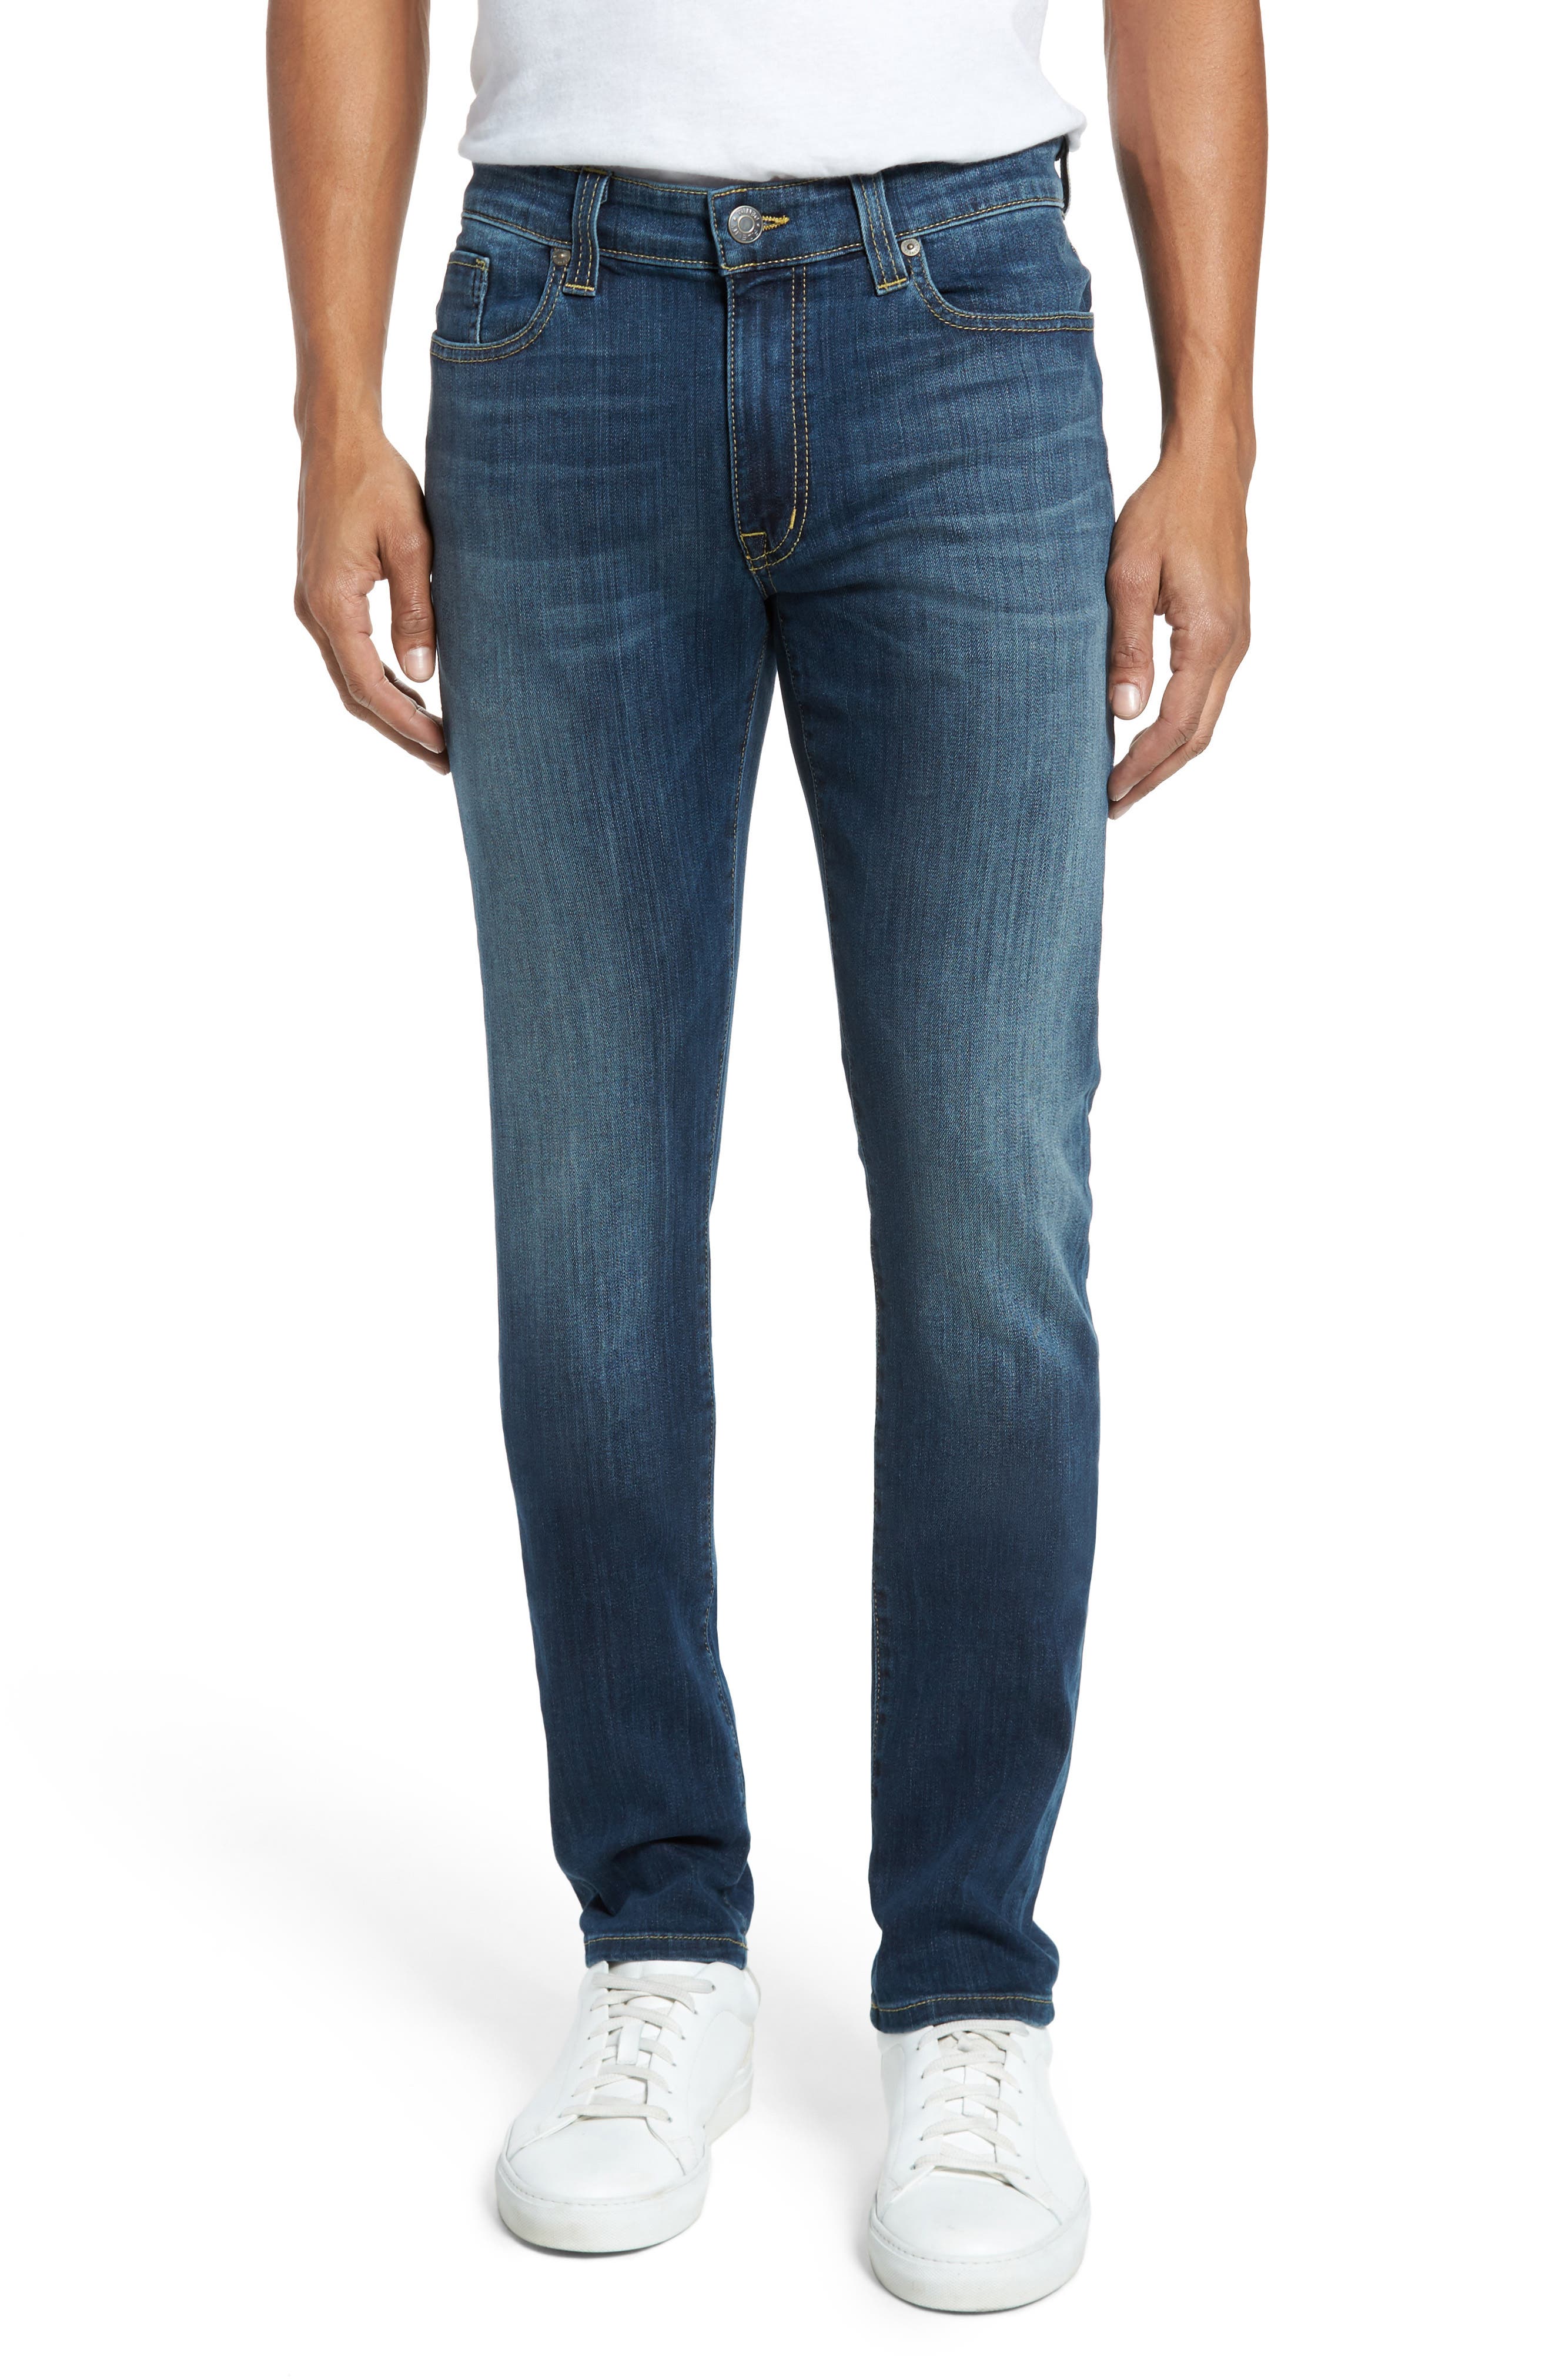 fidelity jeans nordstrom